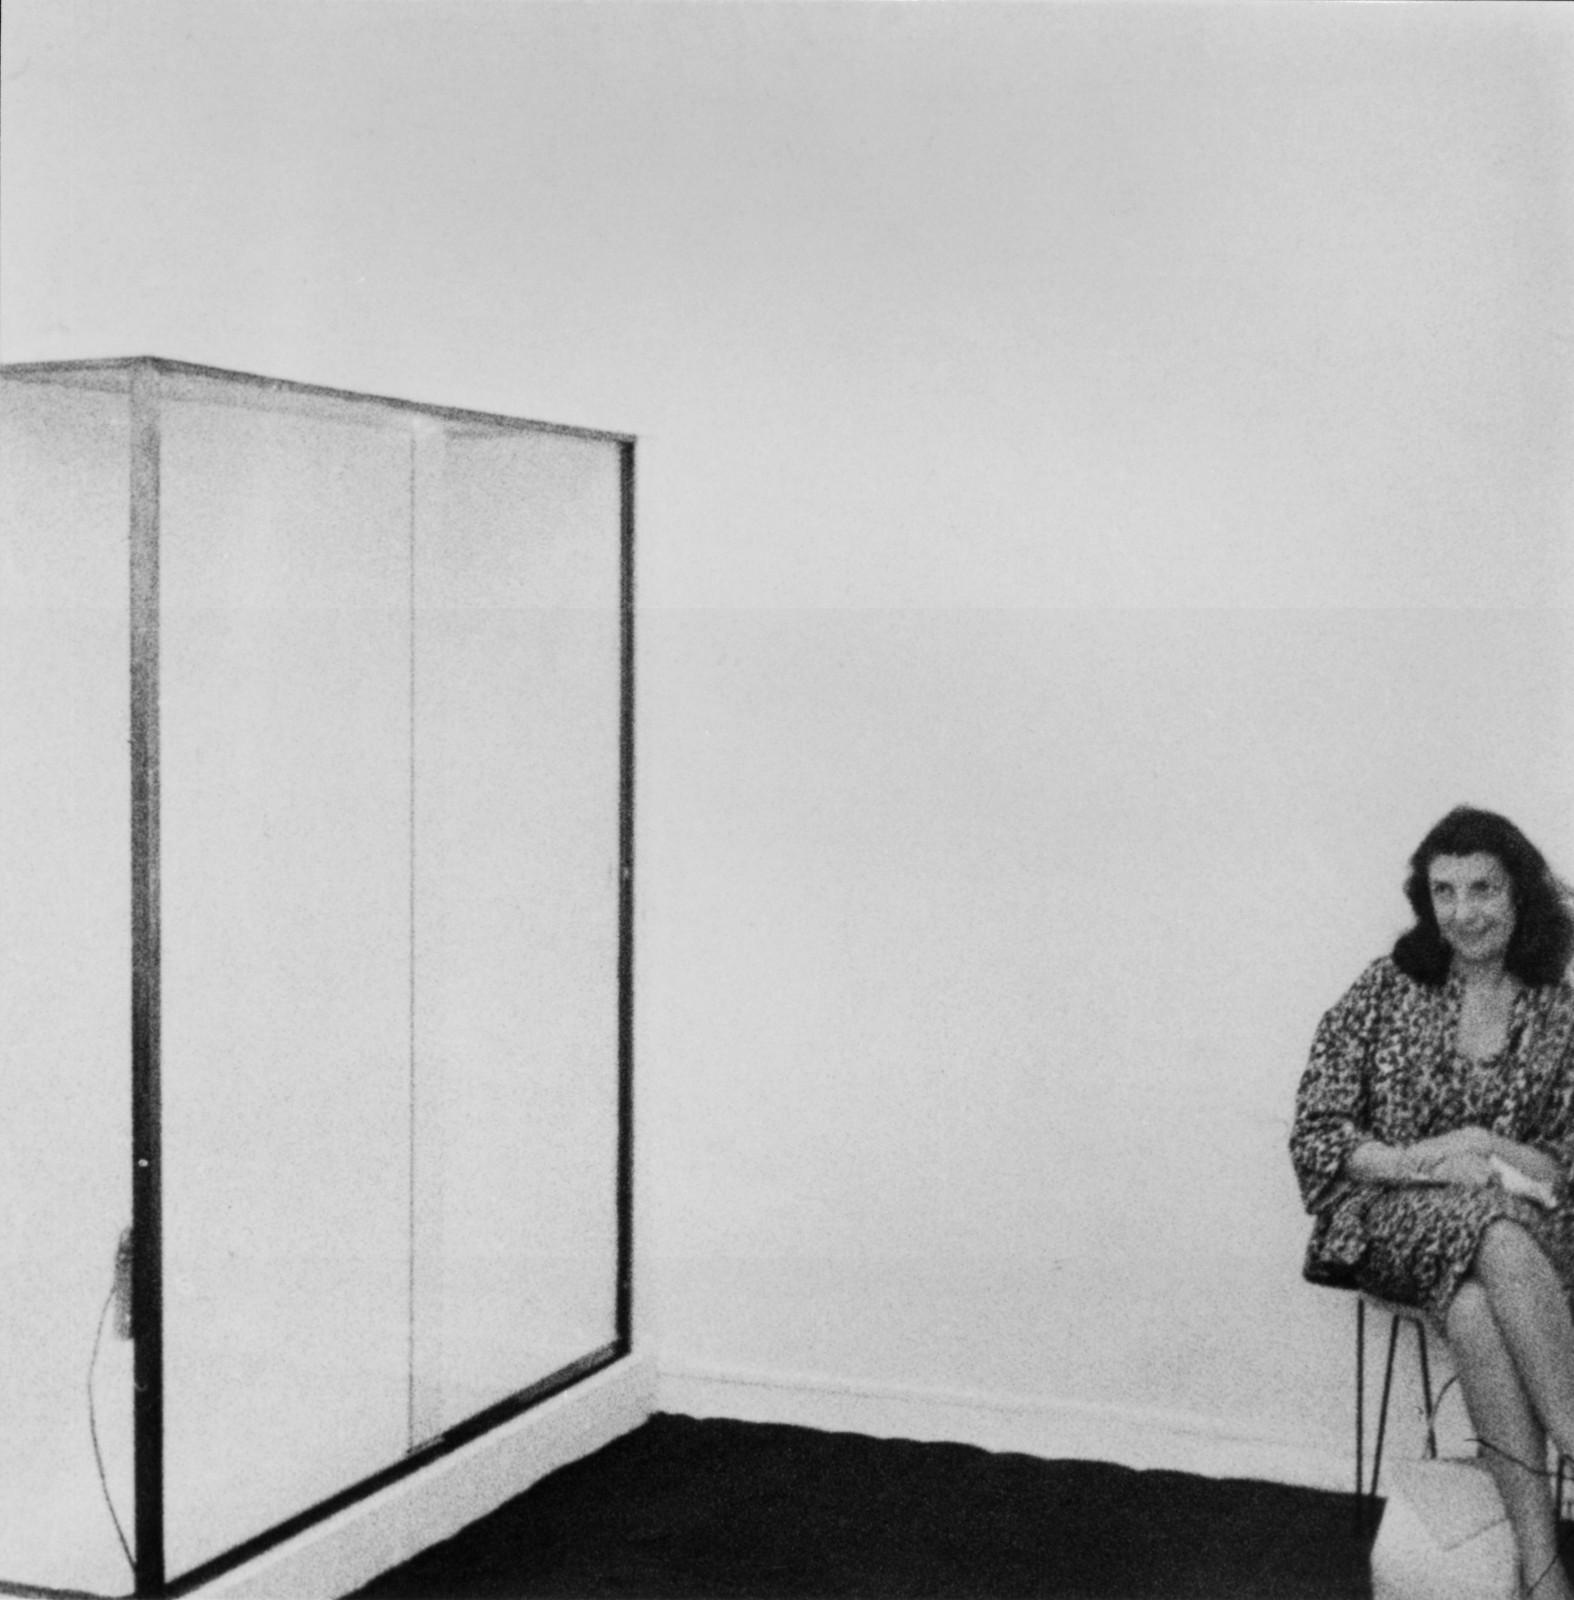 Iris Clert during the exhibition “The Void”, at Gallery Iris Clert, Paris